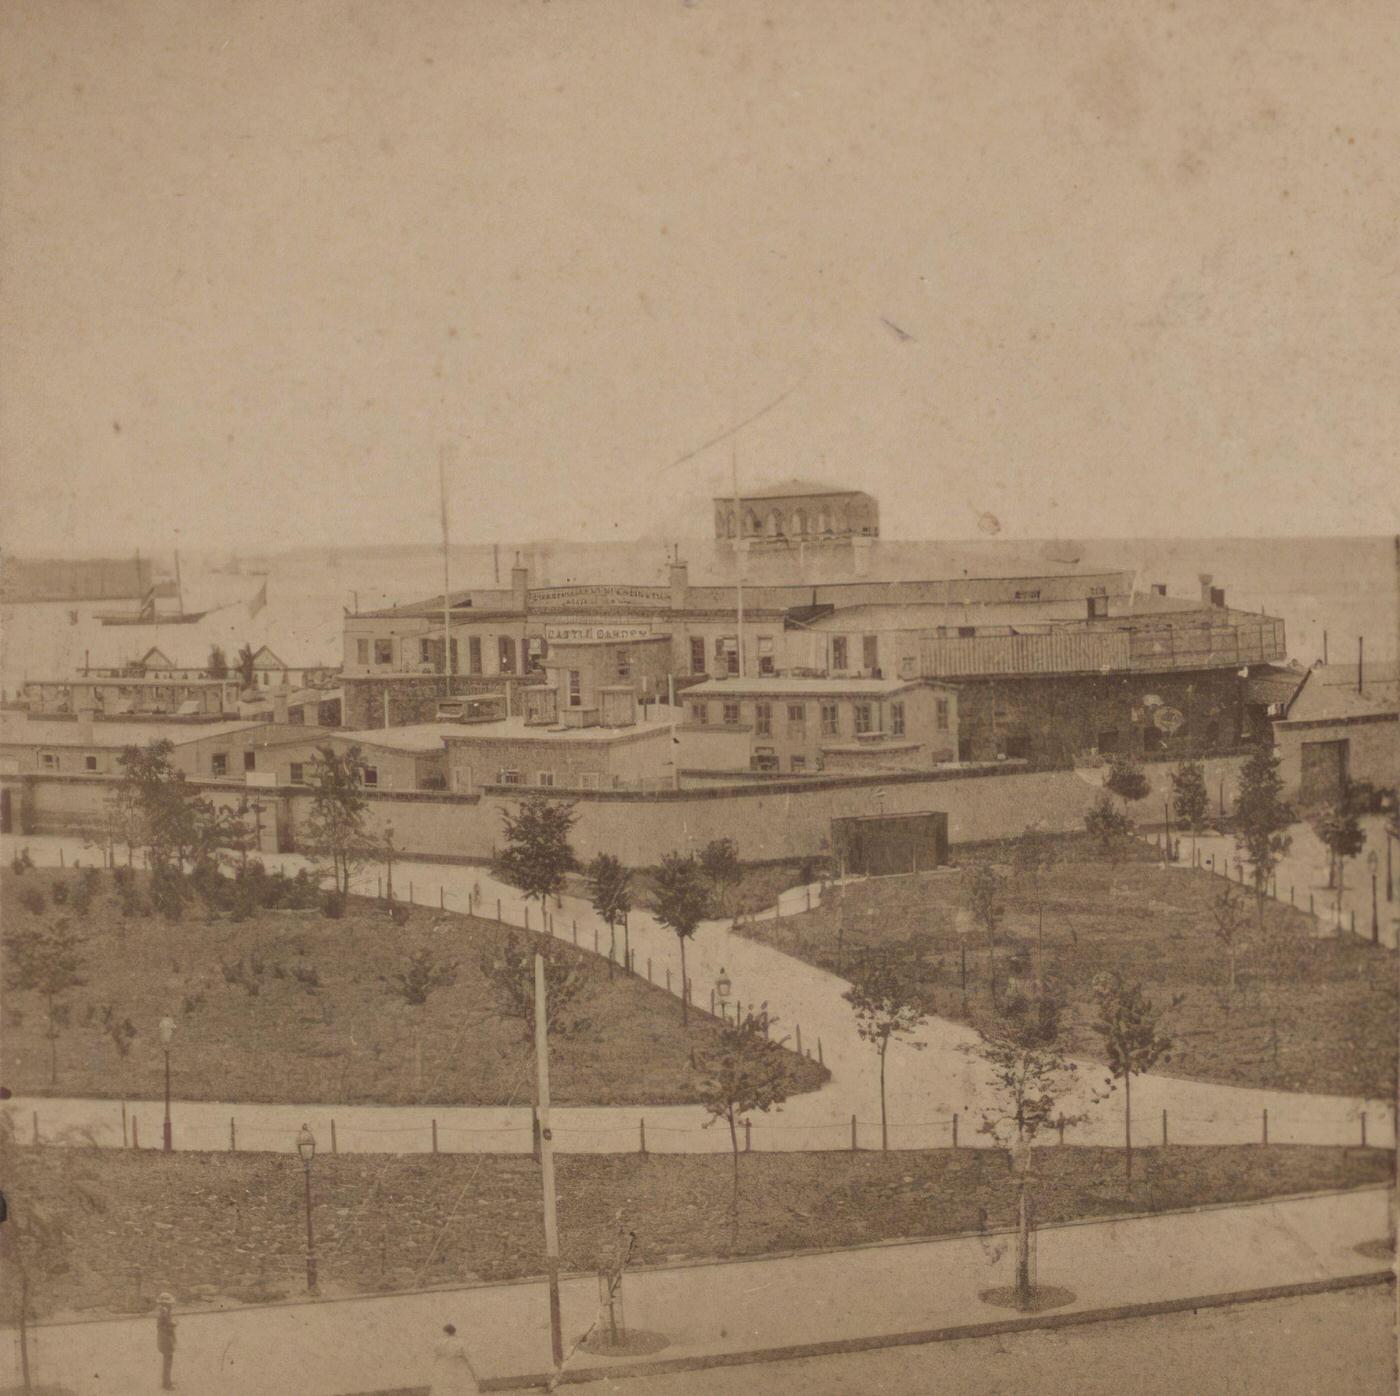 Castle Garden, View Of Grounds, Manhattan, New York City, 1870